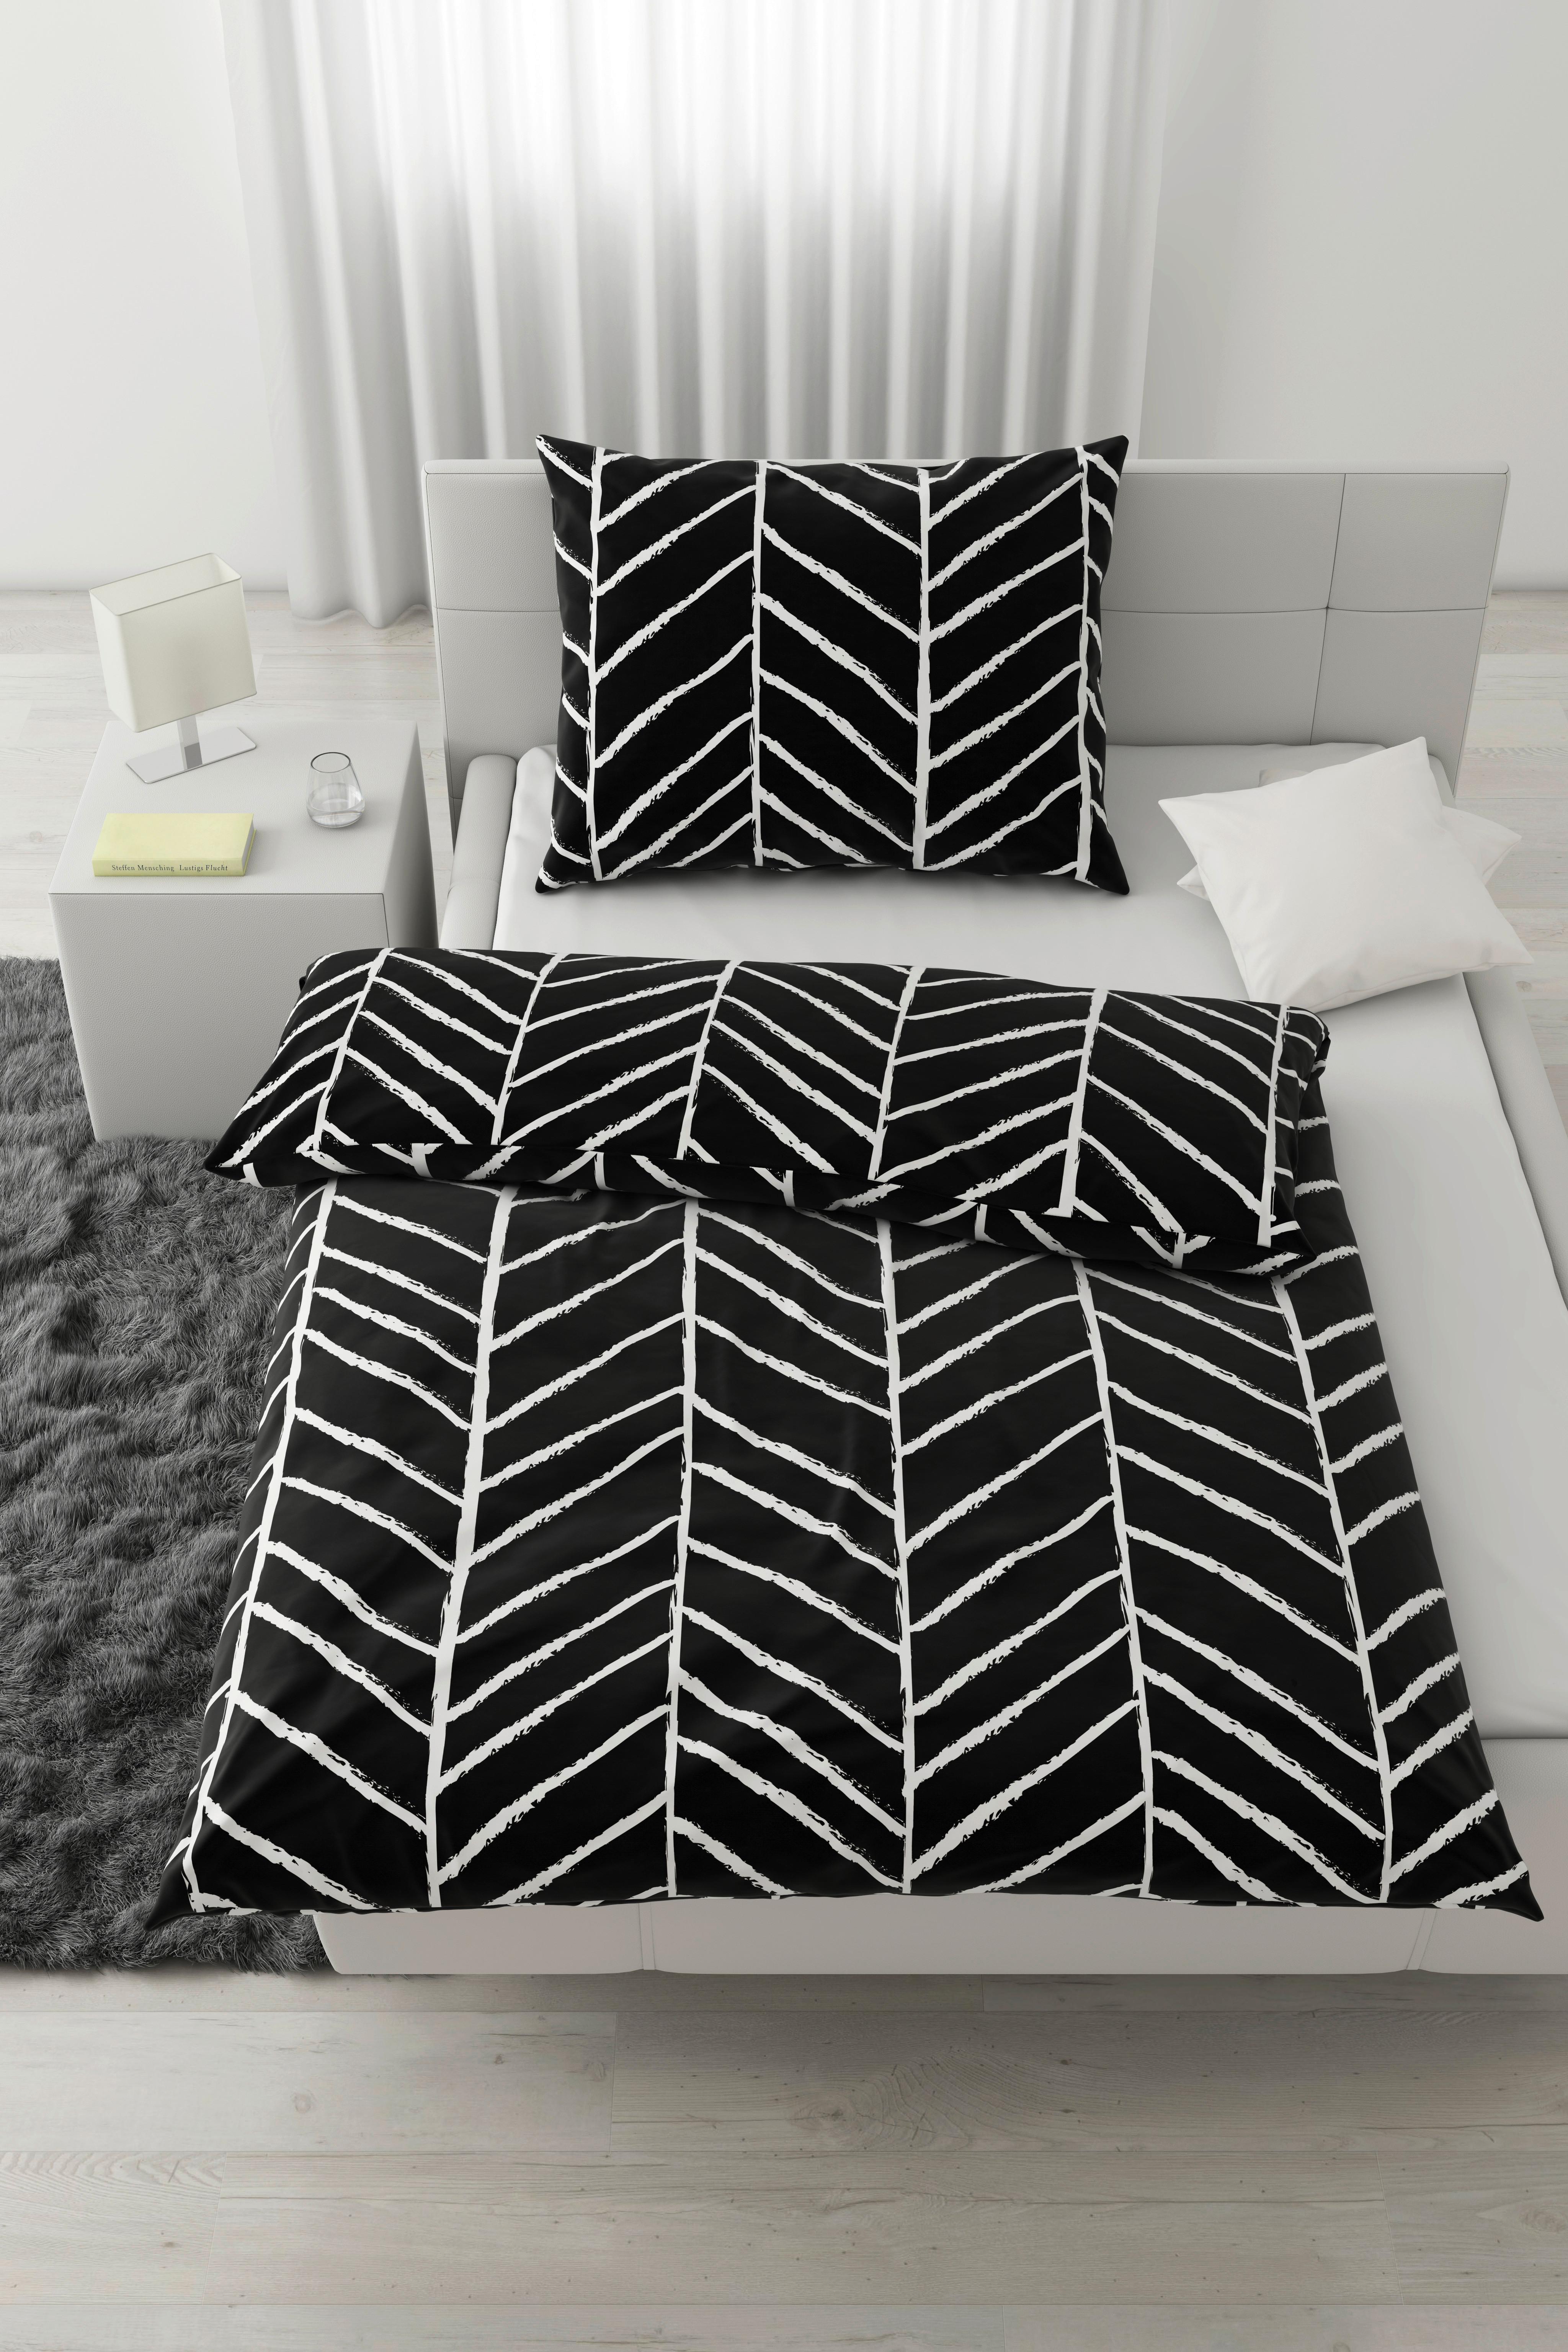 Lenjerie de pat Marble - negru, Konventionell, textil (140/200cm) - Modern Living